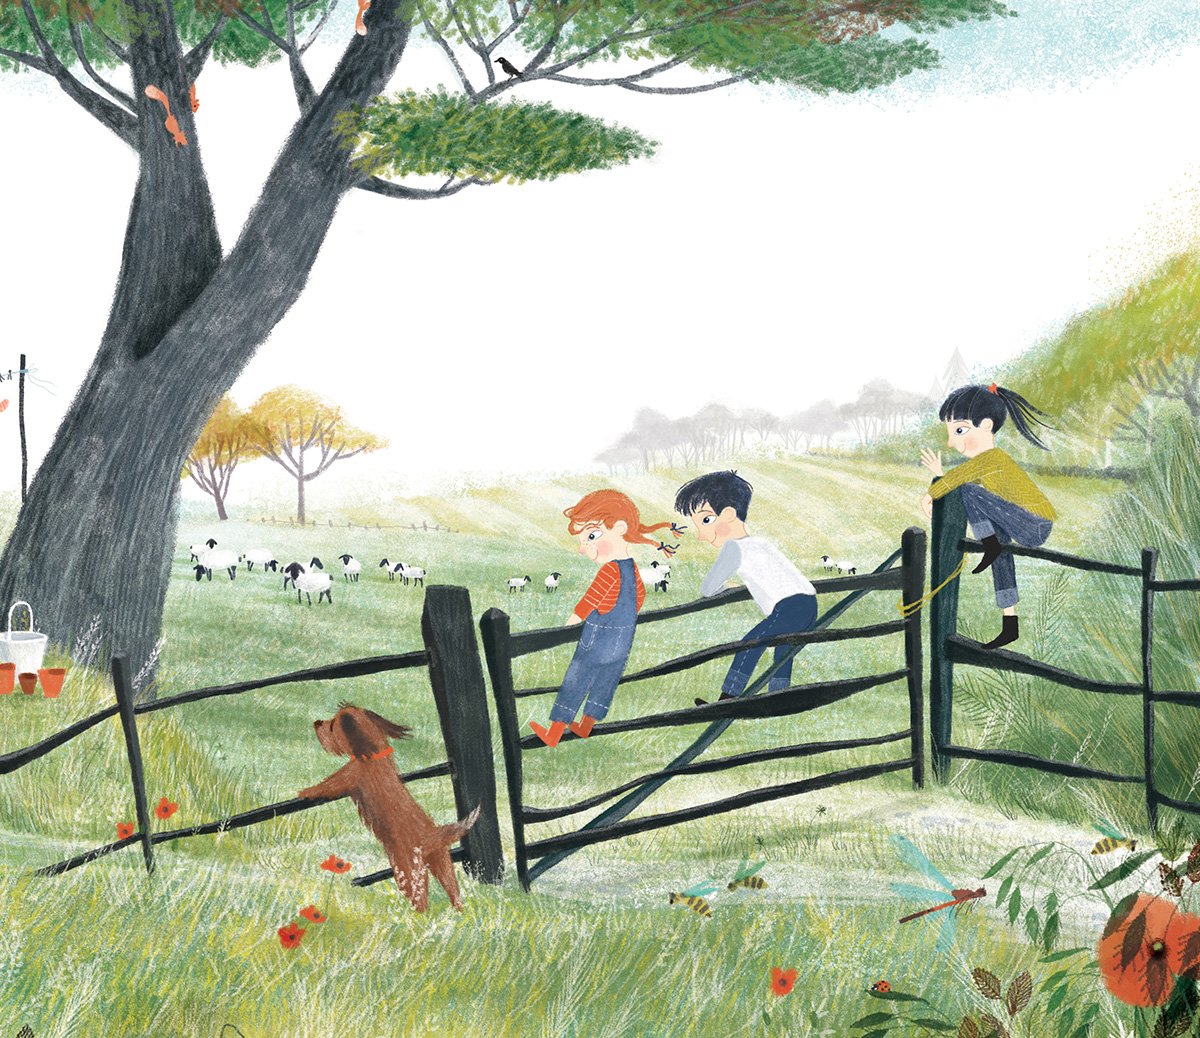 kim-geyer-kids-in-the-countryside-illustration.jpg